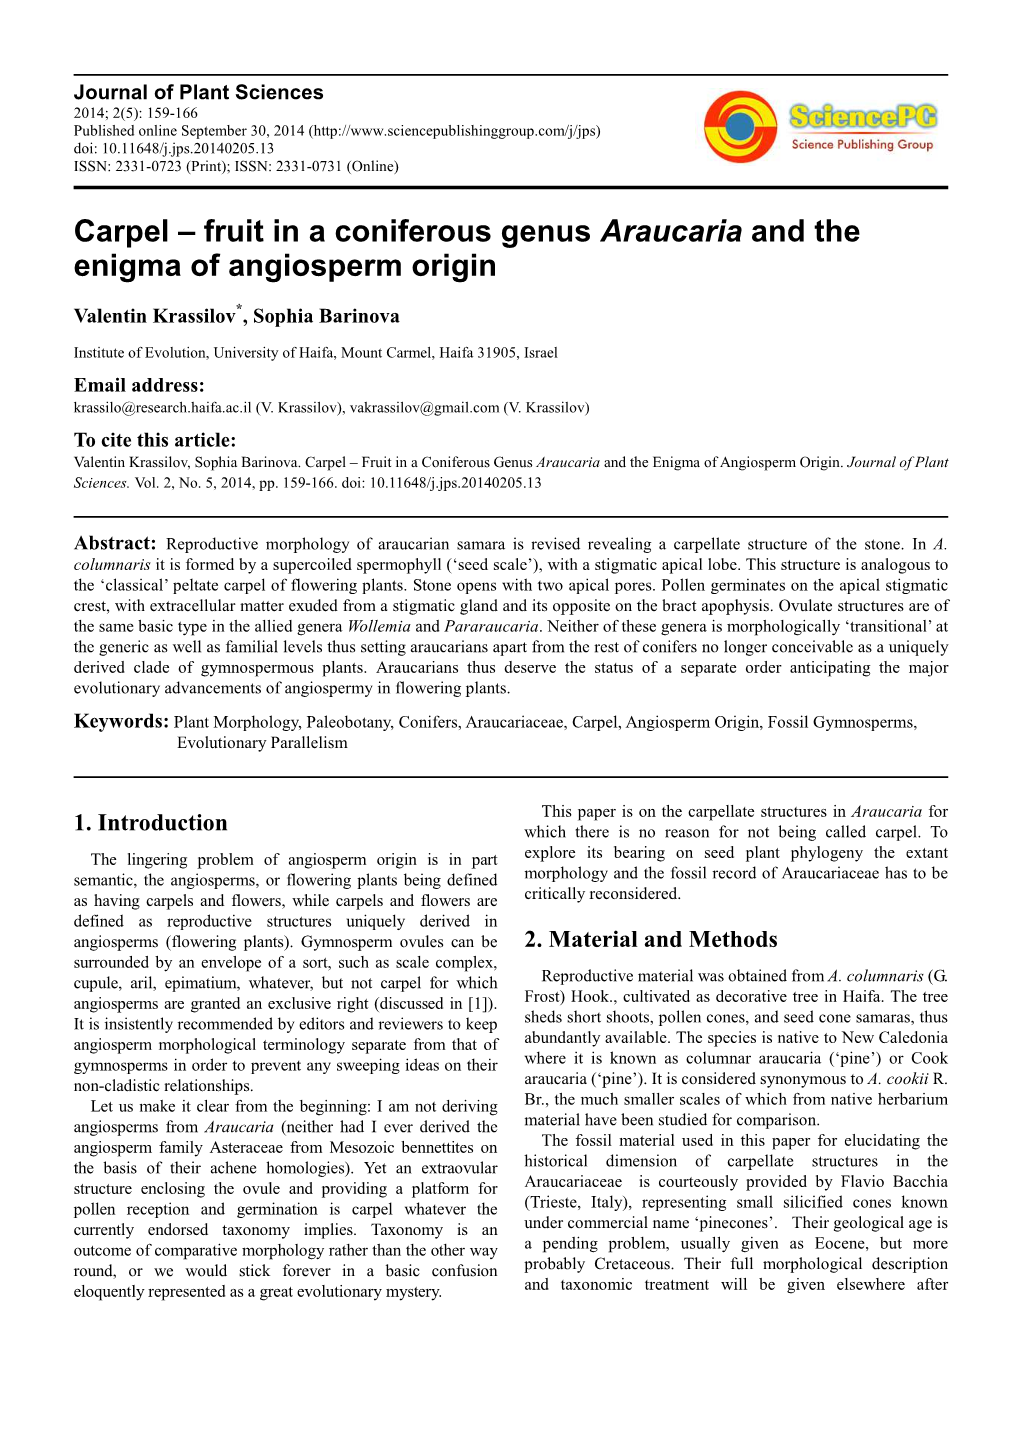 Carpel – Fruit in a Coniferous Genus Araucaria and the Enigma of Angiosperm Origin